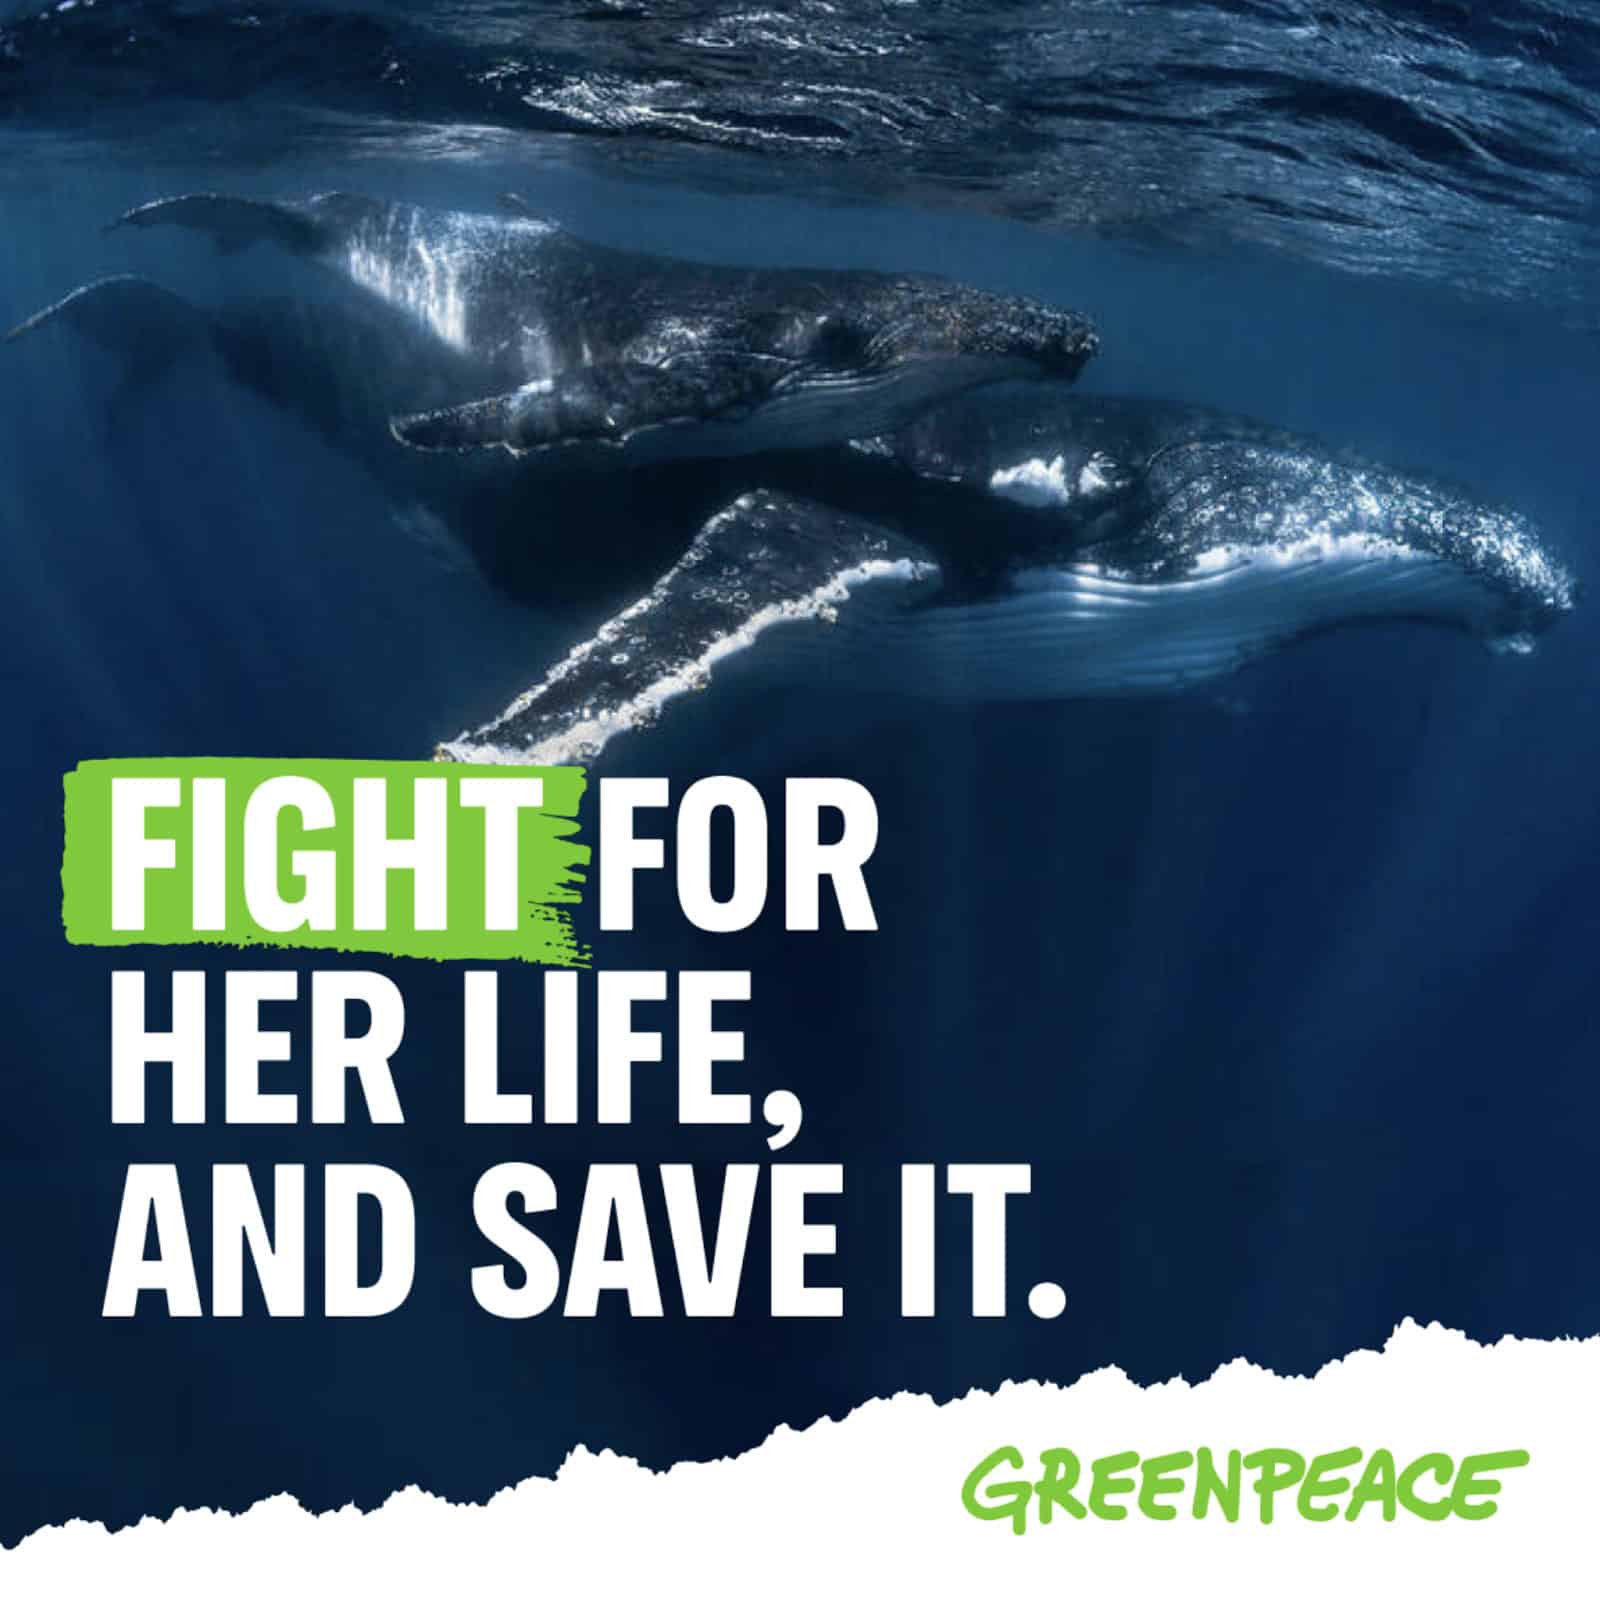 Greenpeace Australia - Warriors for Good campaign